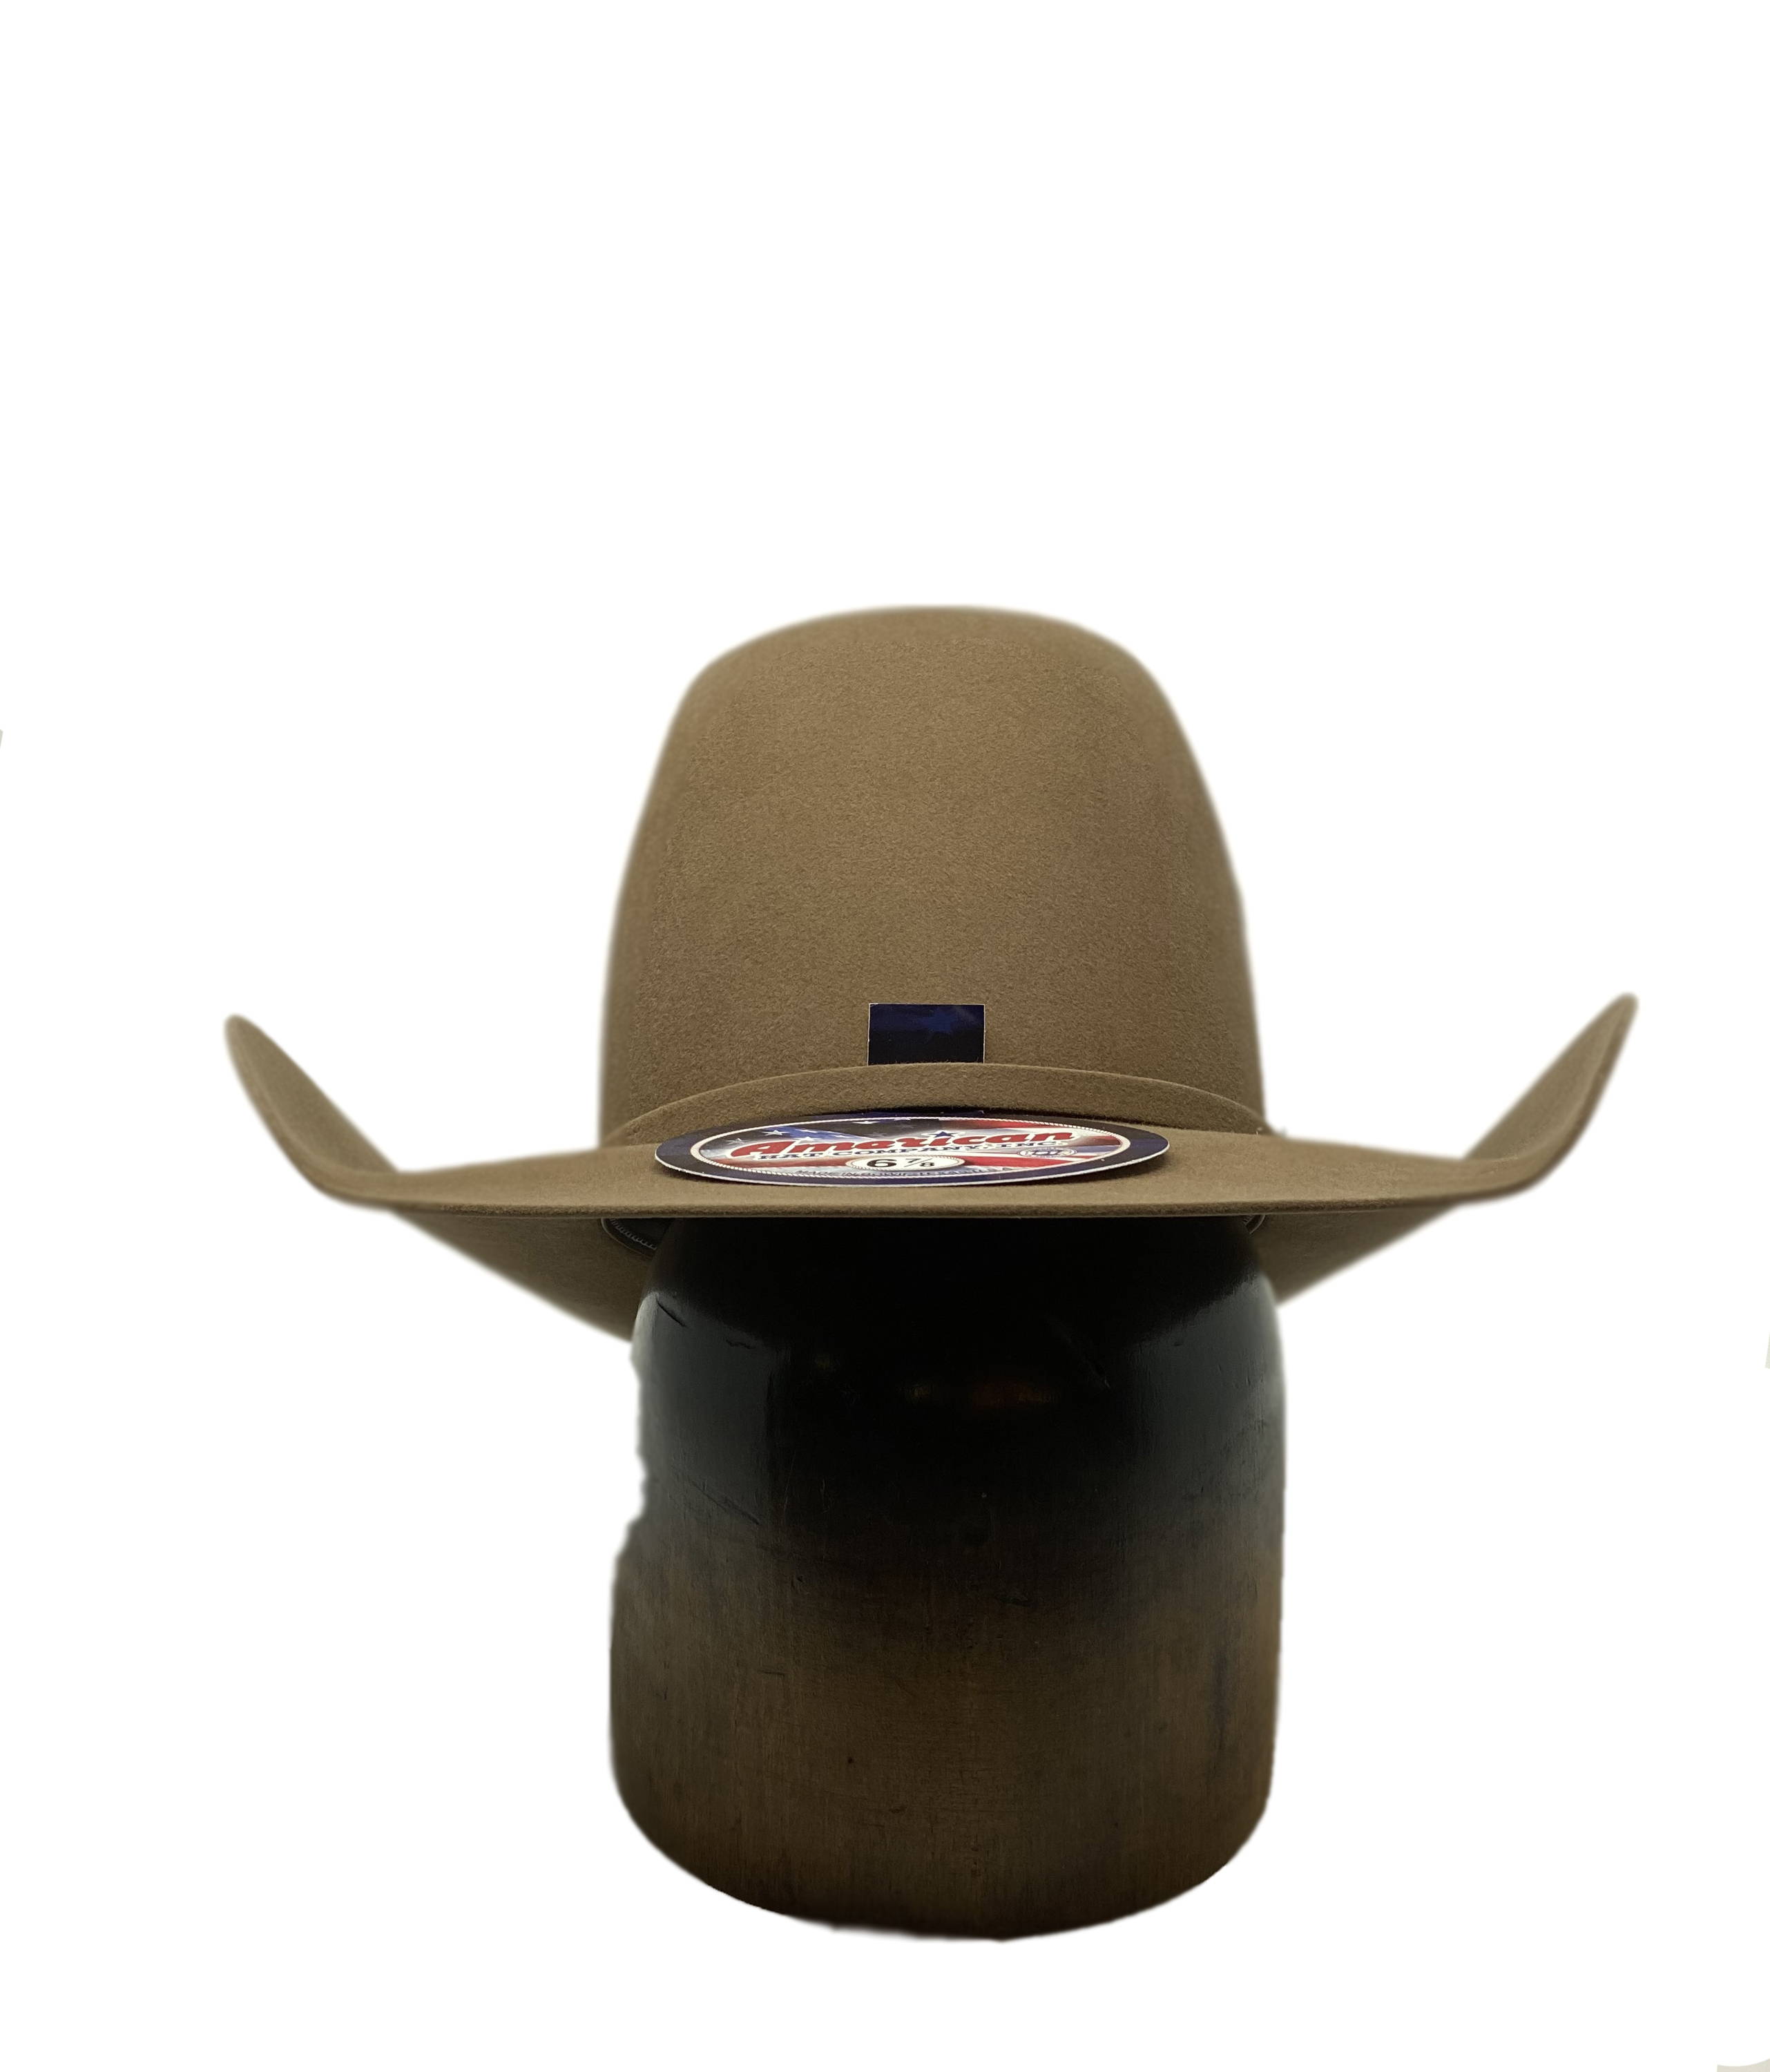 Horseman Open Crown 10X 4.5 Brim Tan Belly Felt Hat by South Texas Tack